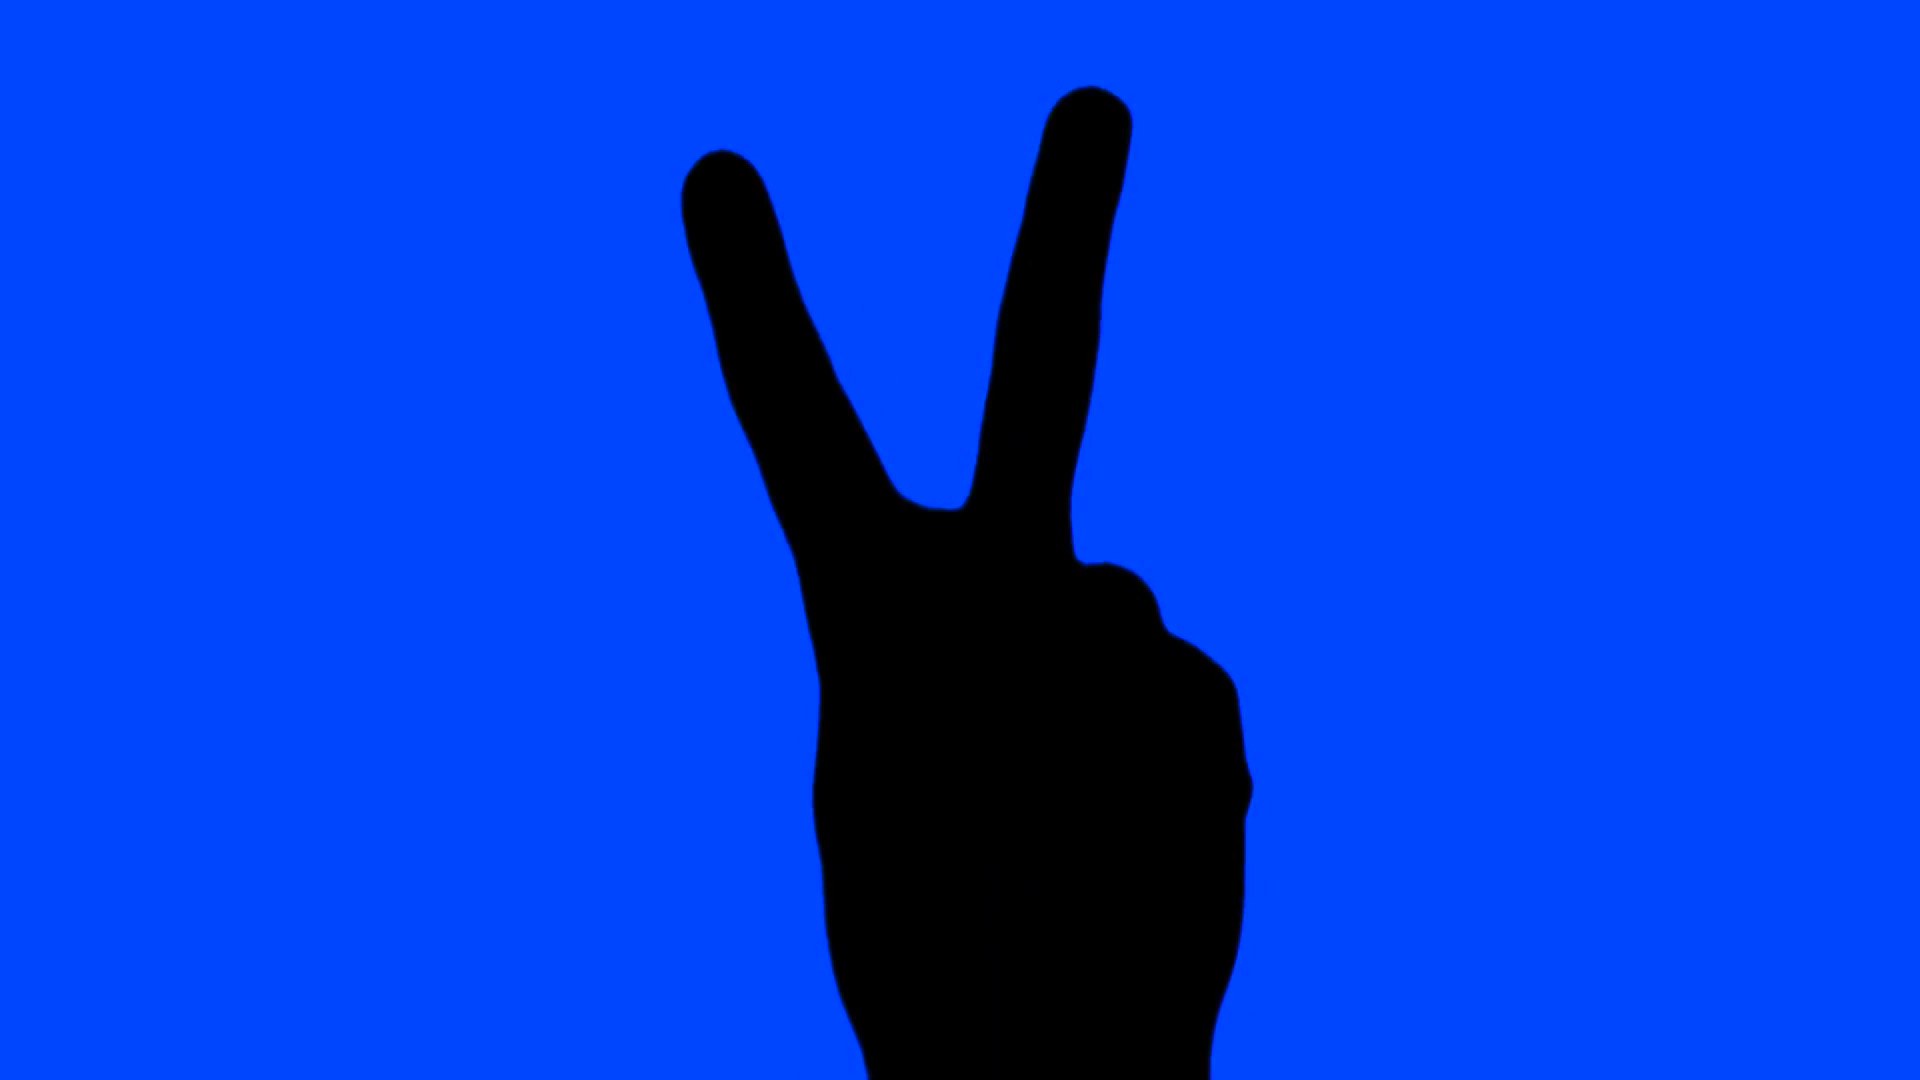 Peace Sign Desktop Wallpaper (58+ images)